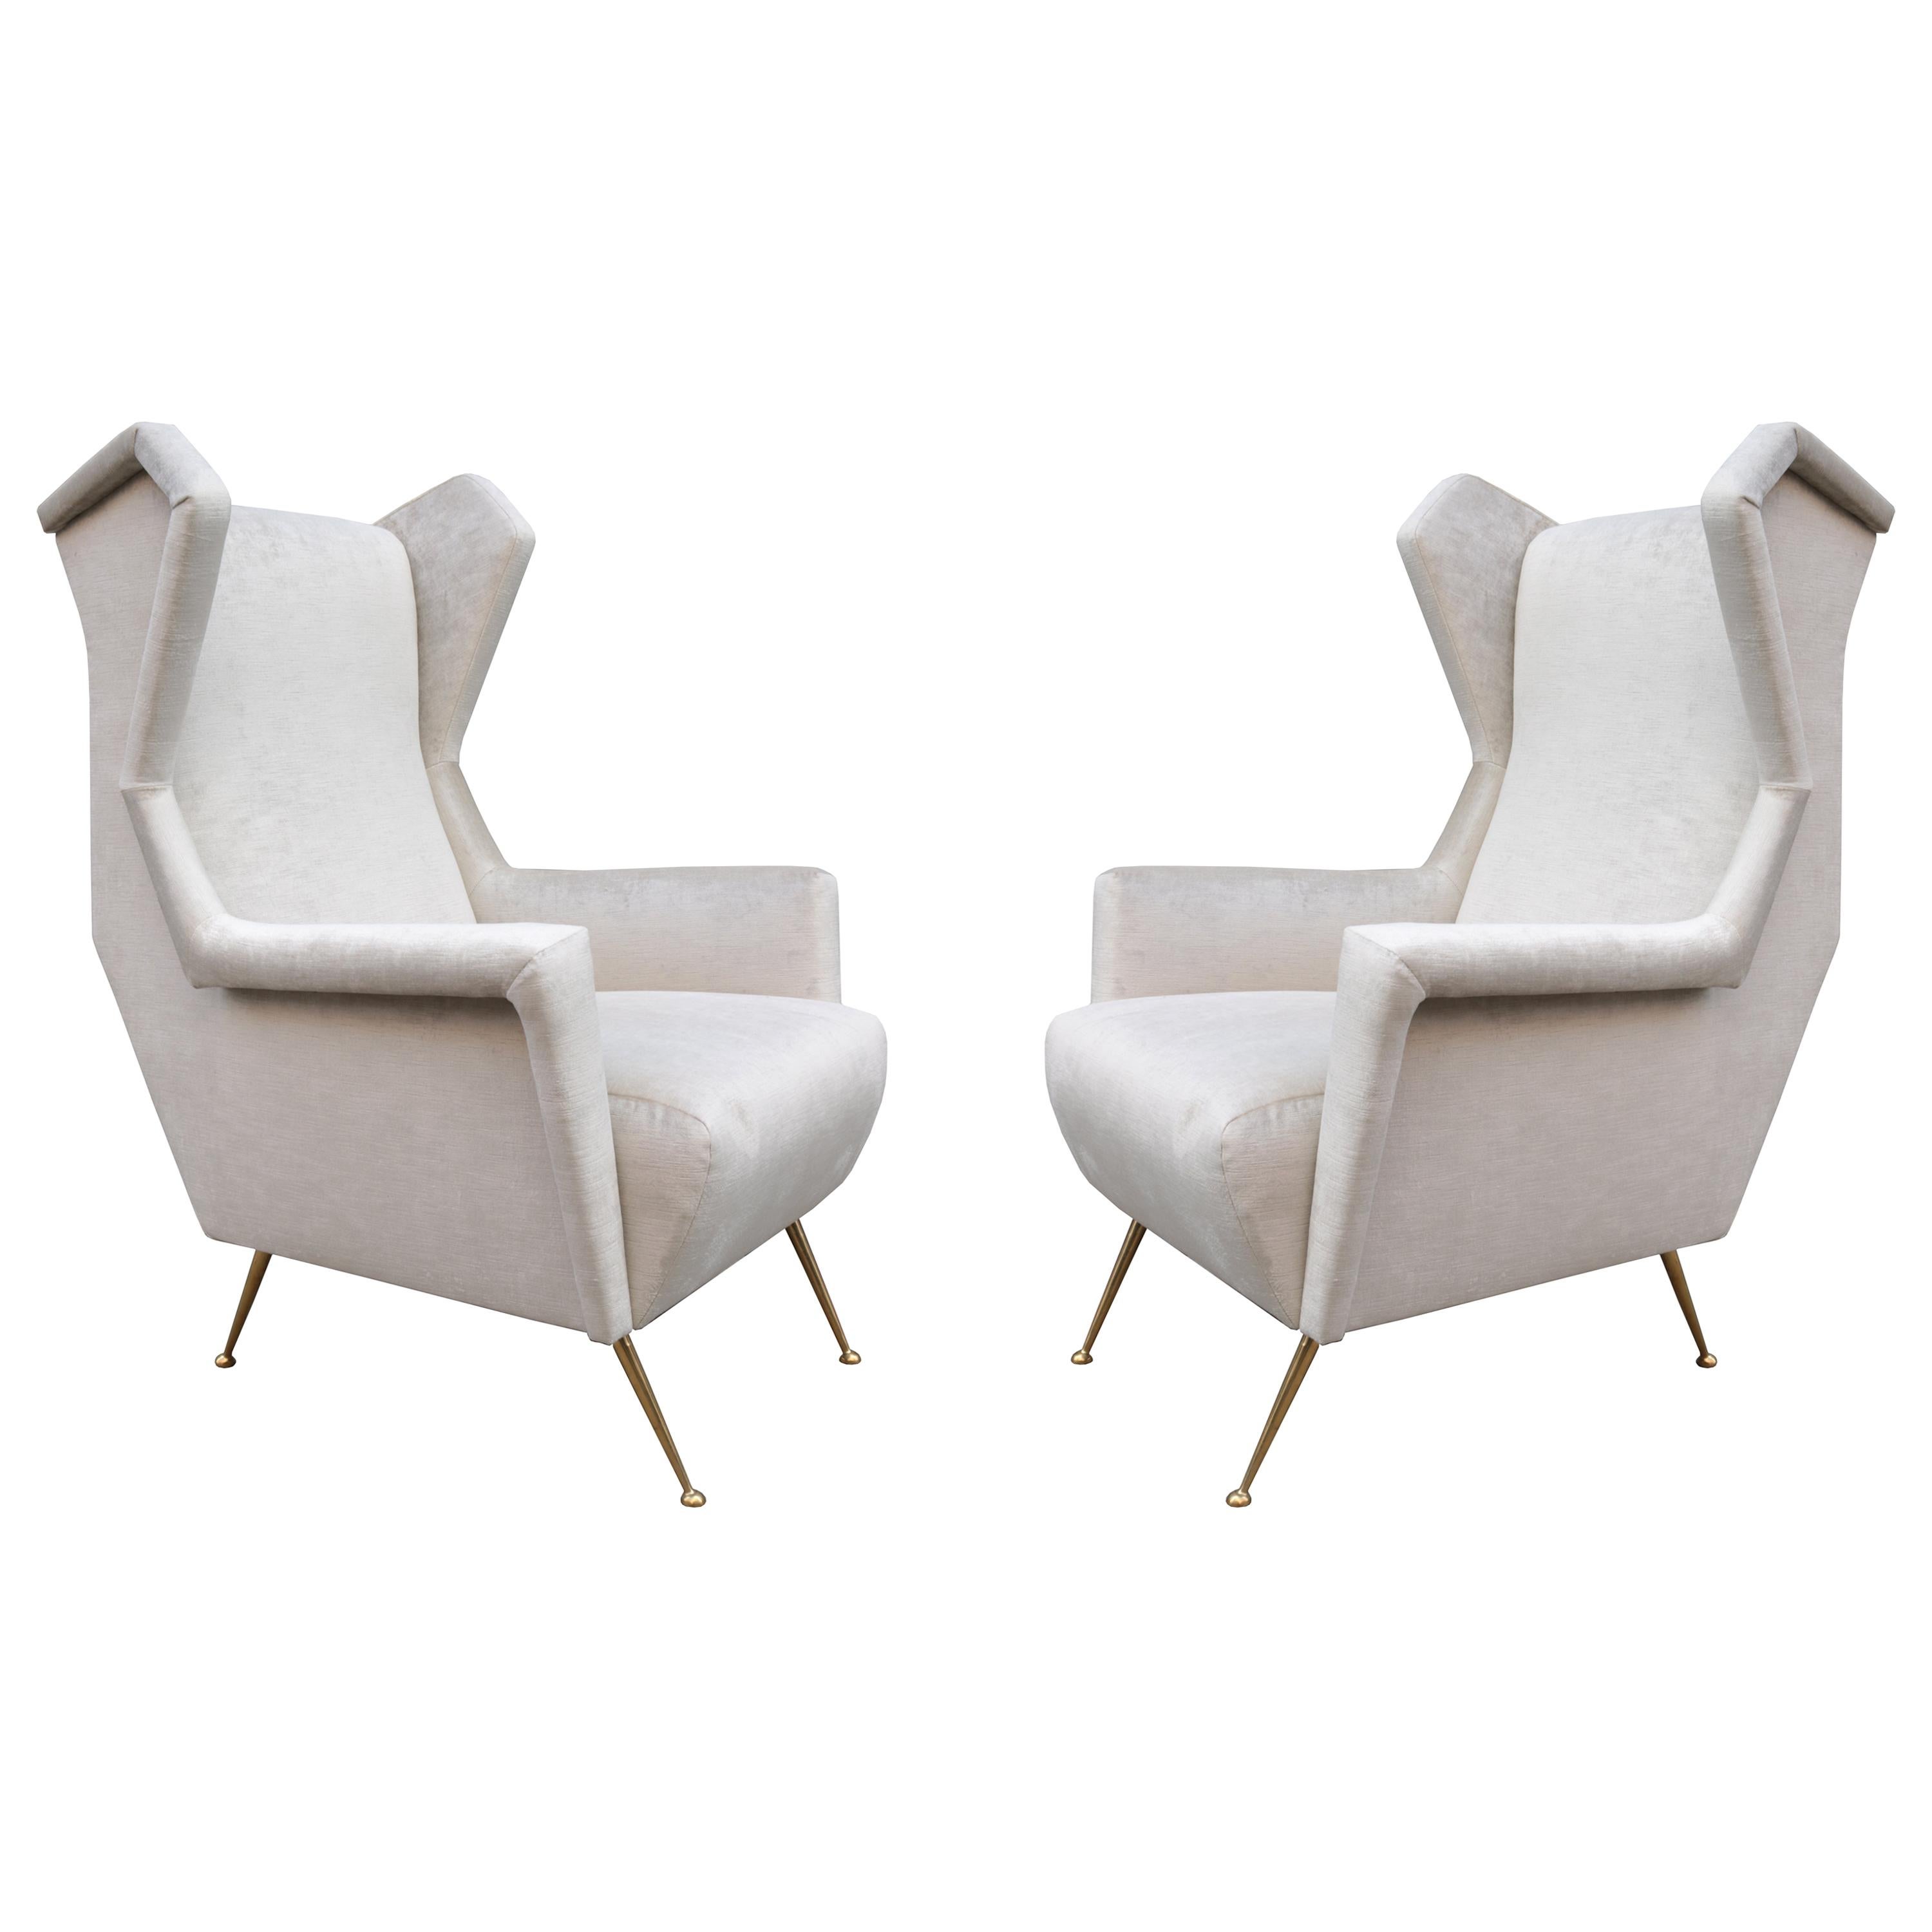 Pair of Italian Midcentury Wing Chairs